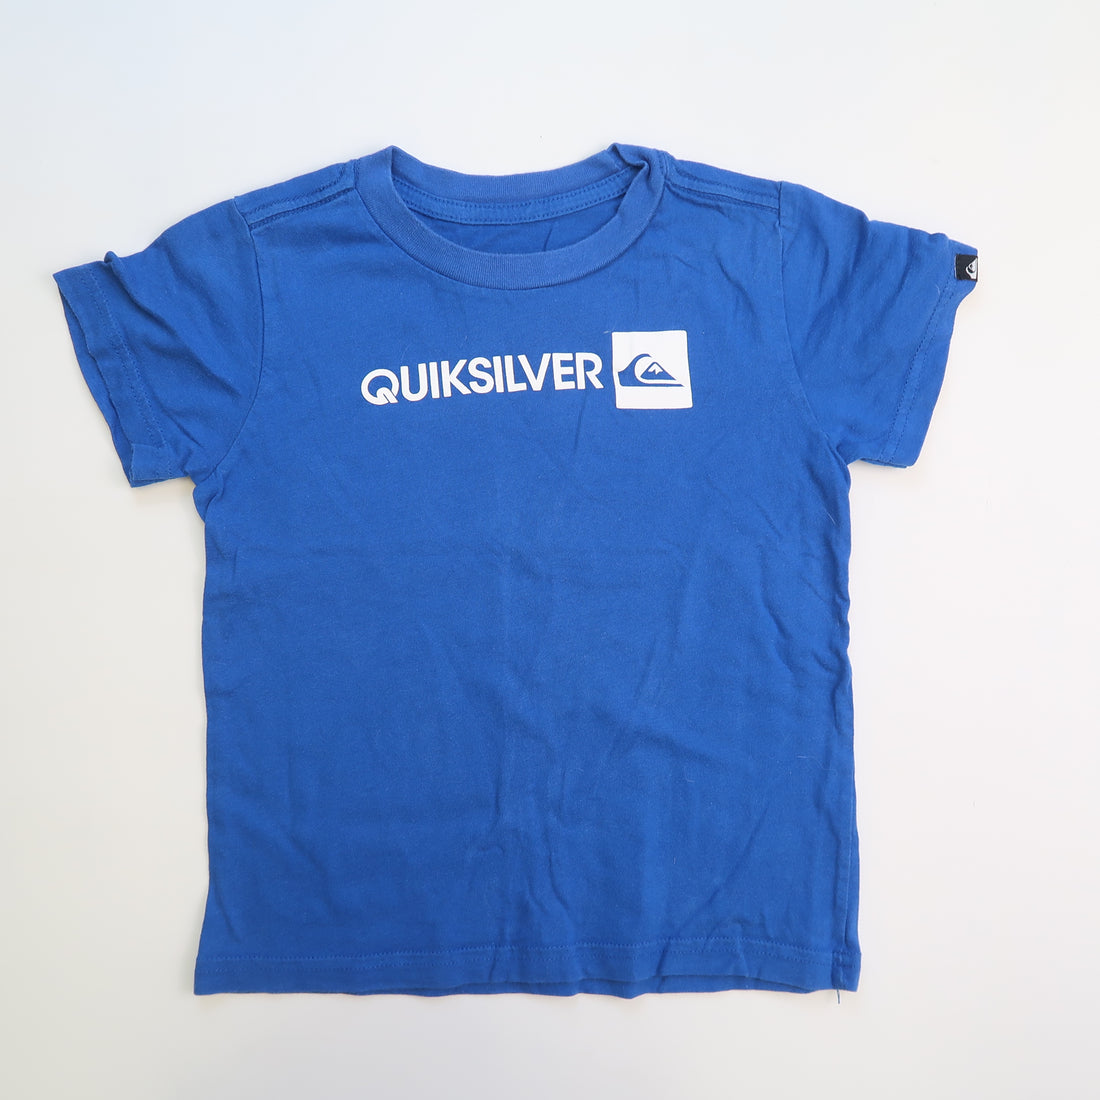 Quiksilver - T-Shirt (4Y)